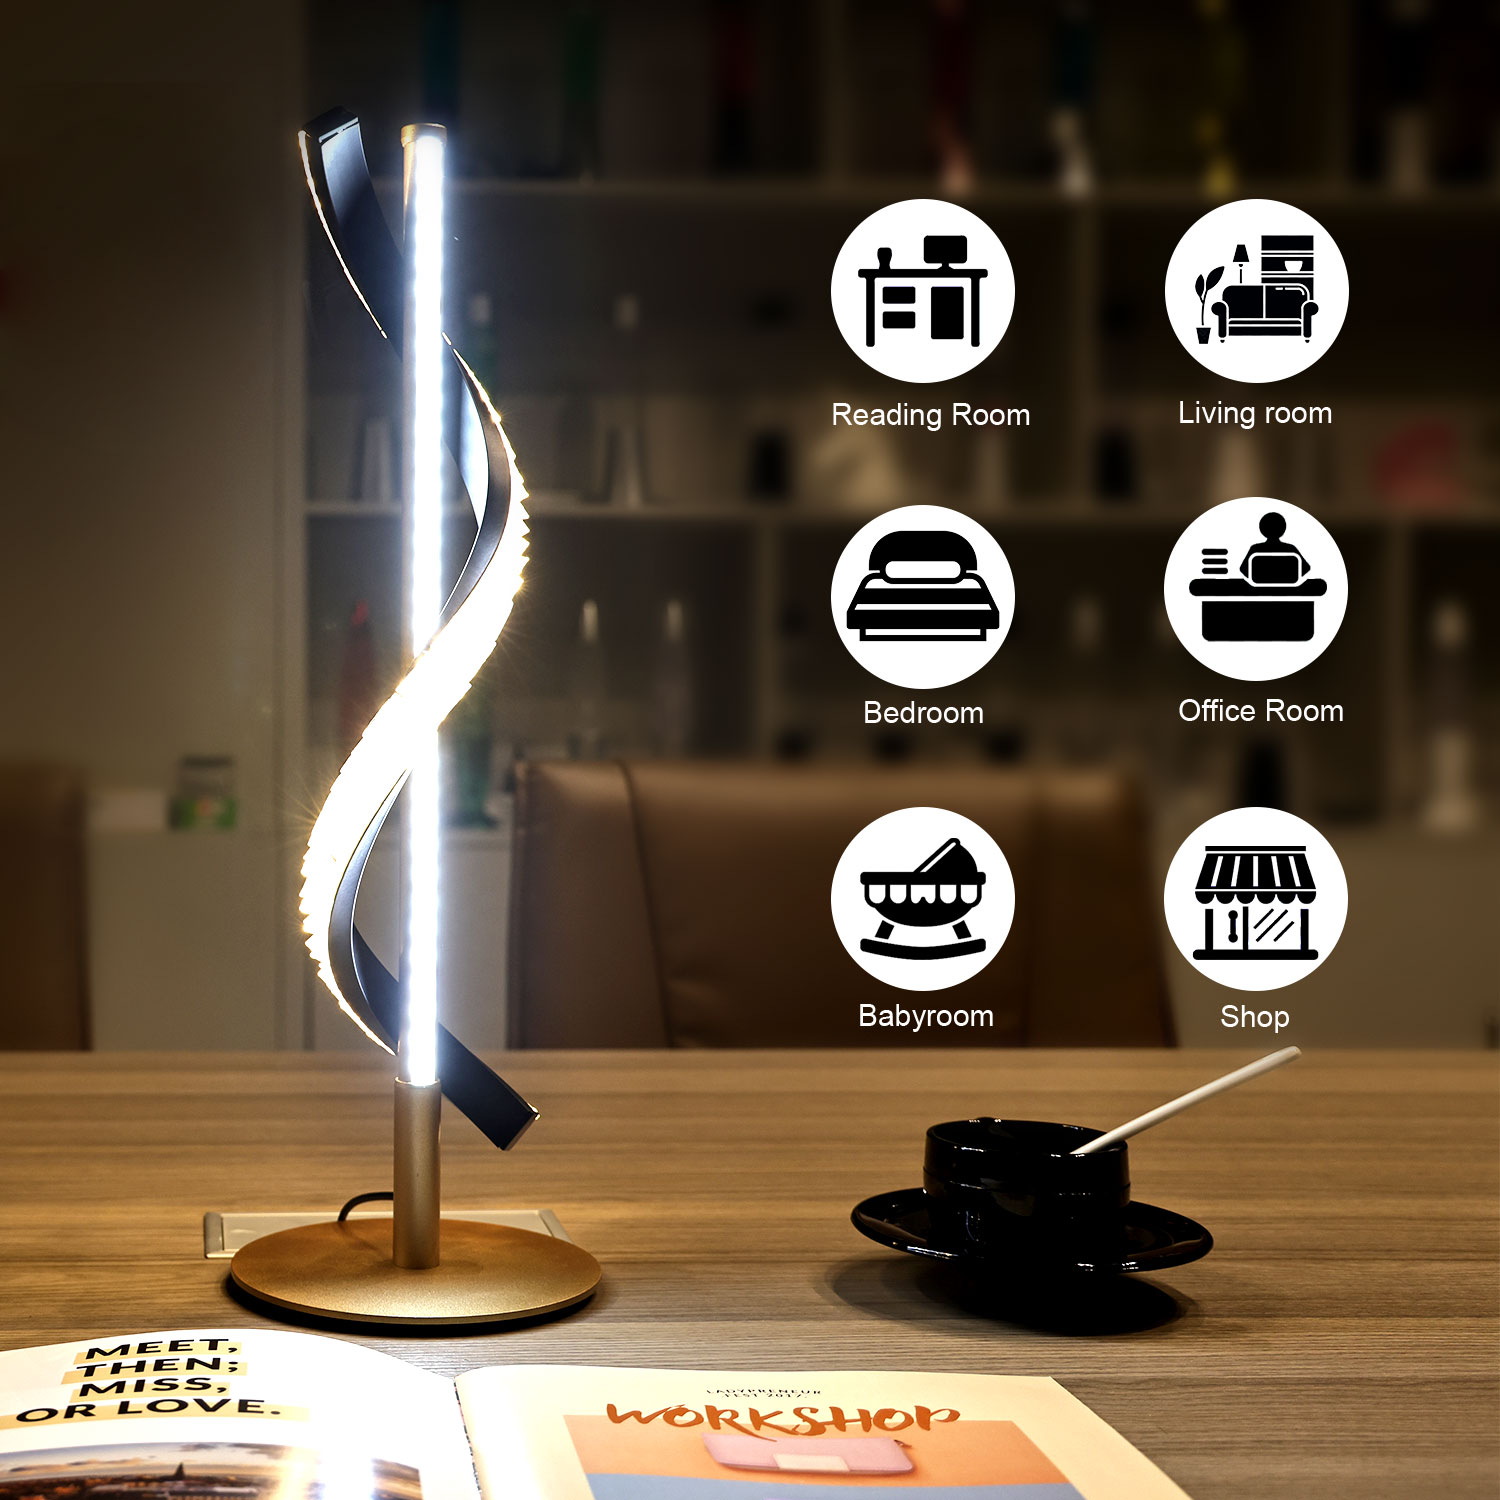 LED Light Fixtures Desk Lamp for Studying or Bedroom